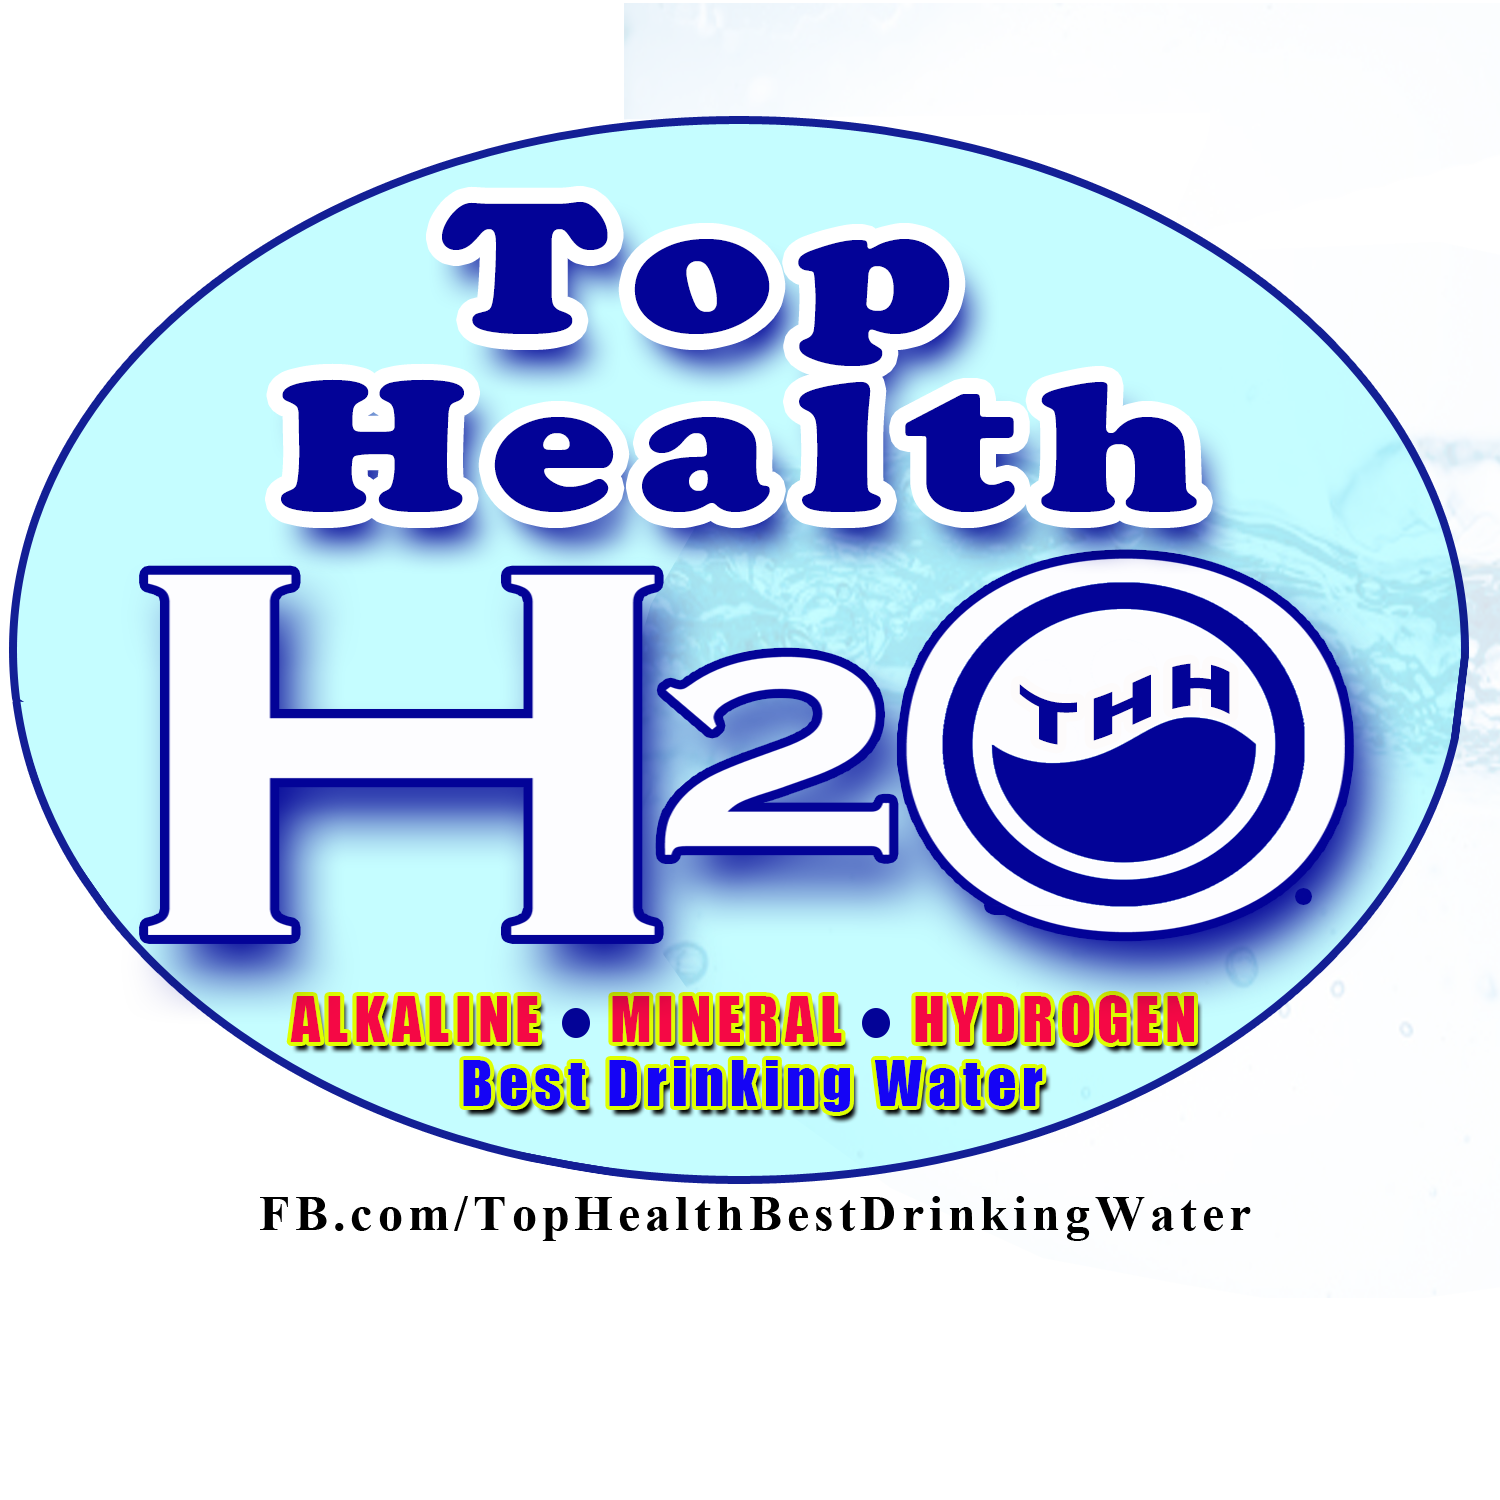 LOGO-tff-TOP-HEALTH-H2O-